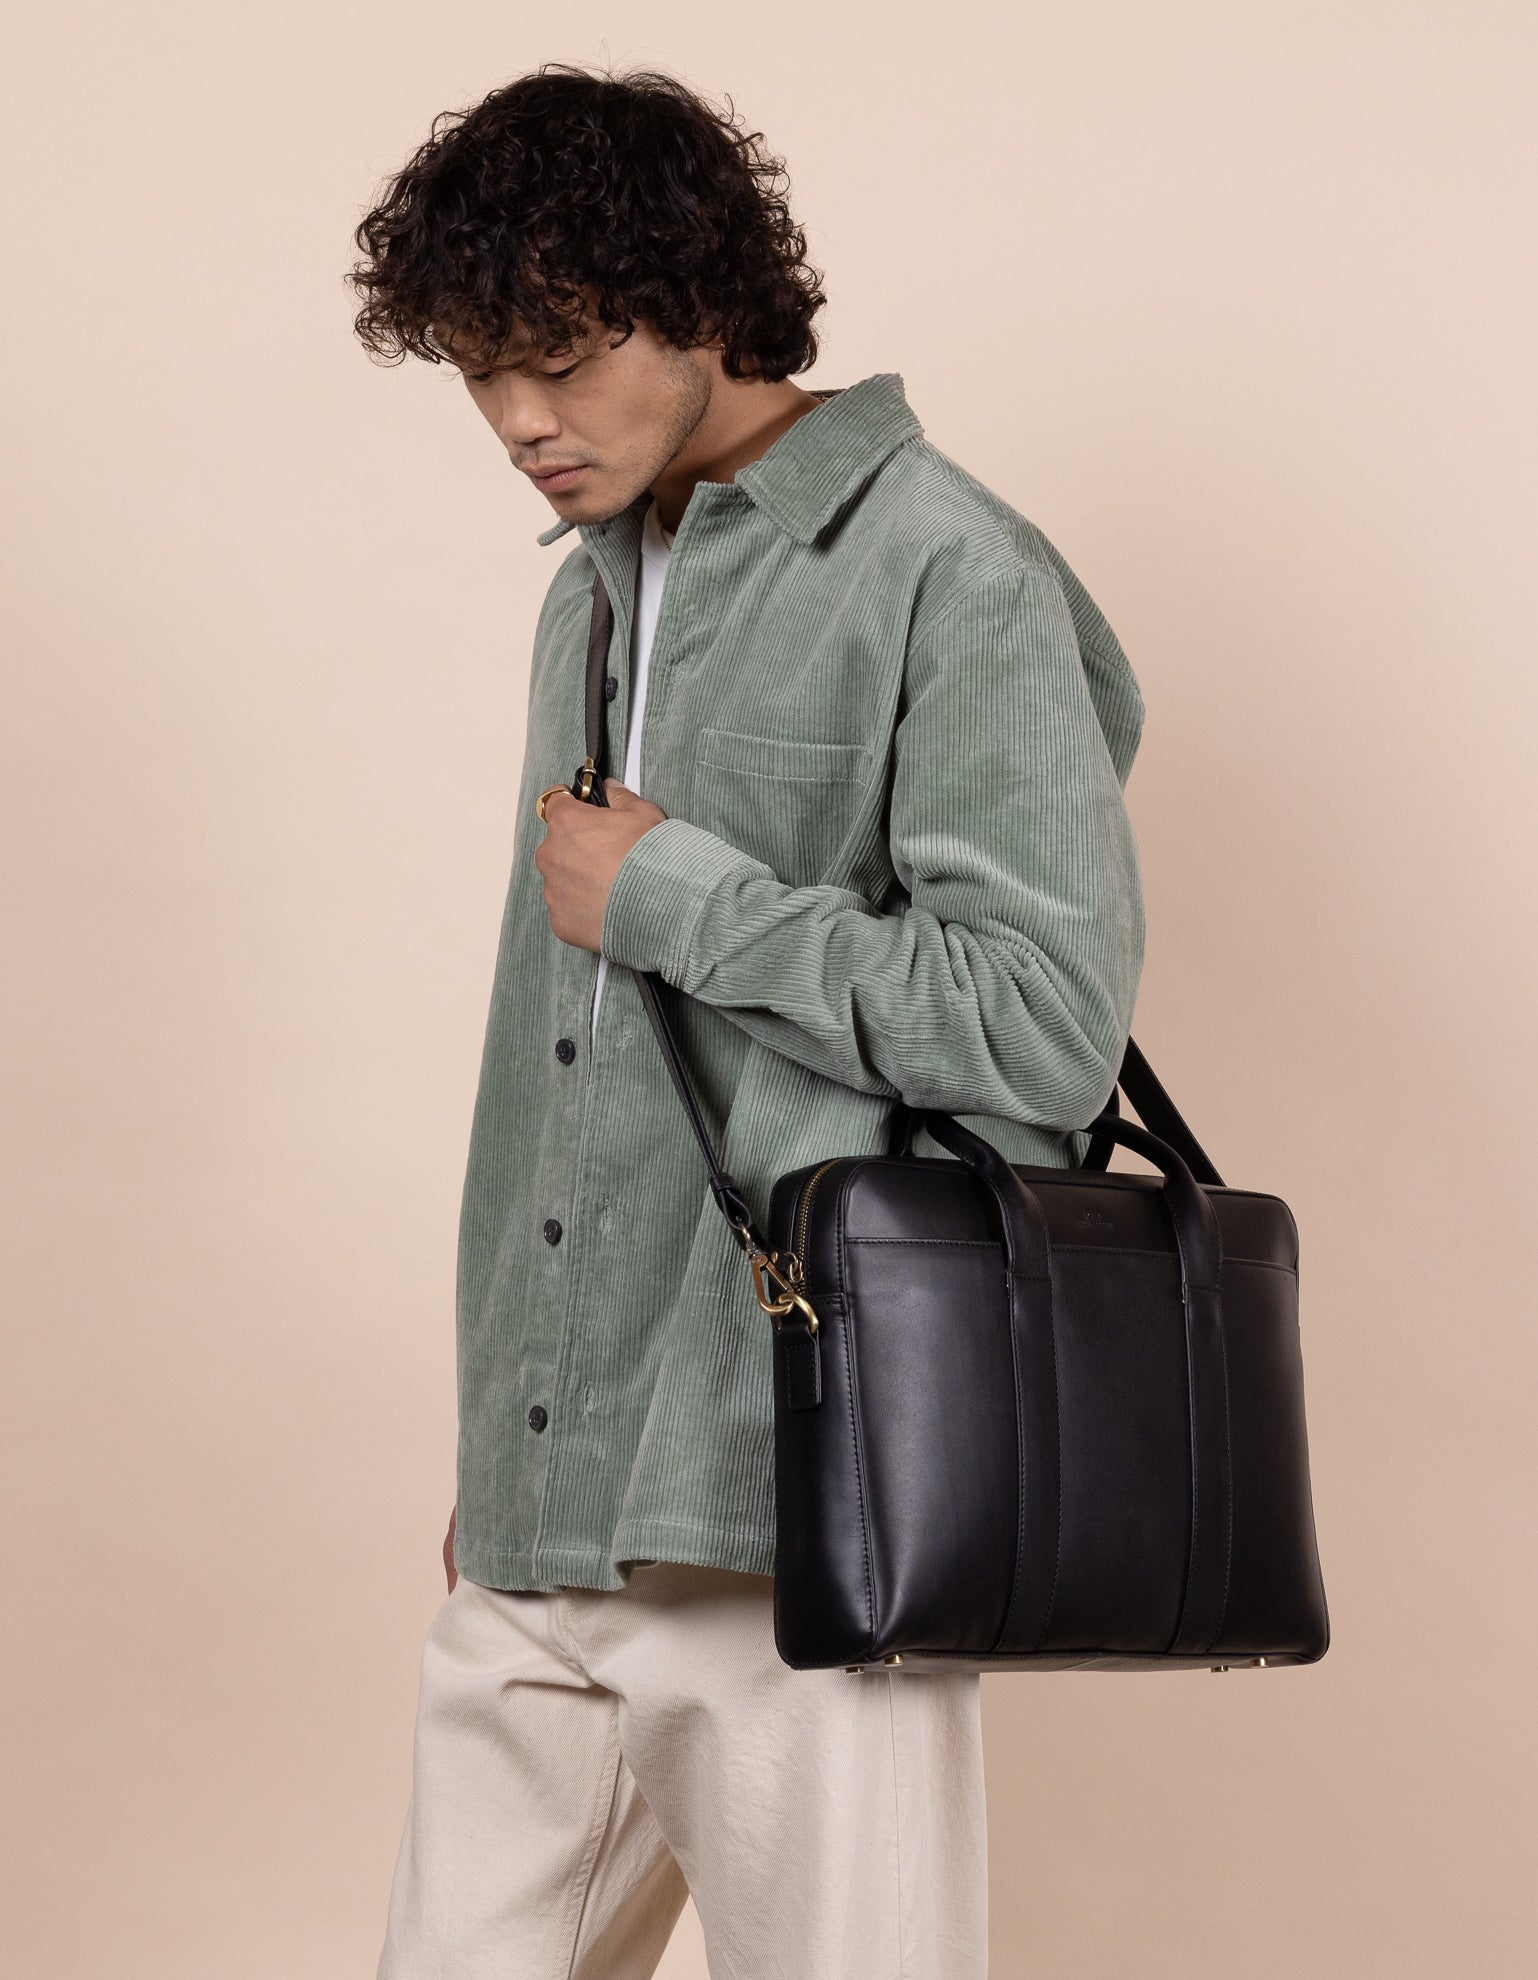 Black Leather business bag. Model product image.